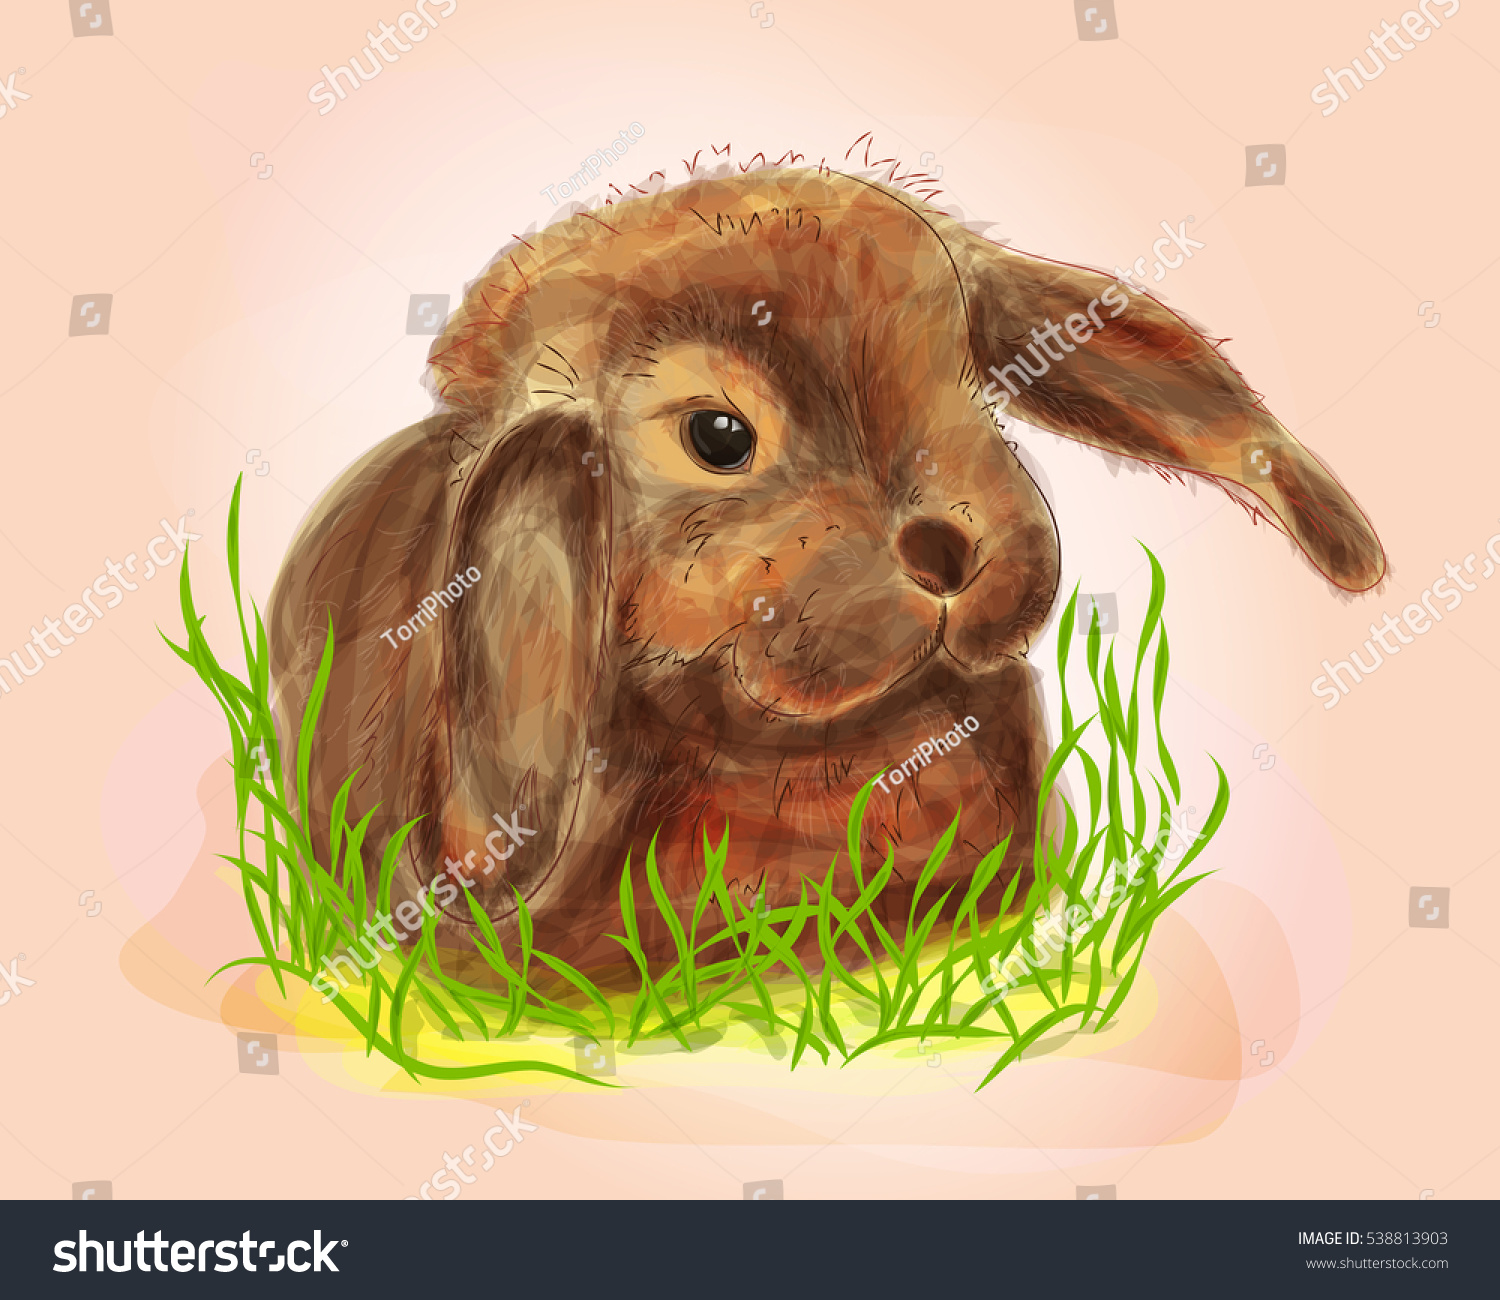 https://www.shutterstock.com/image-illustration/digital-illustration-cute-bunny-grass-watercolor-538813903